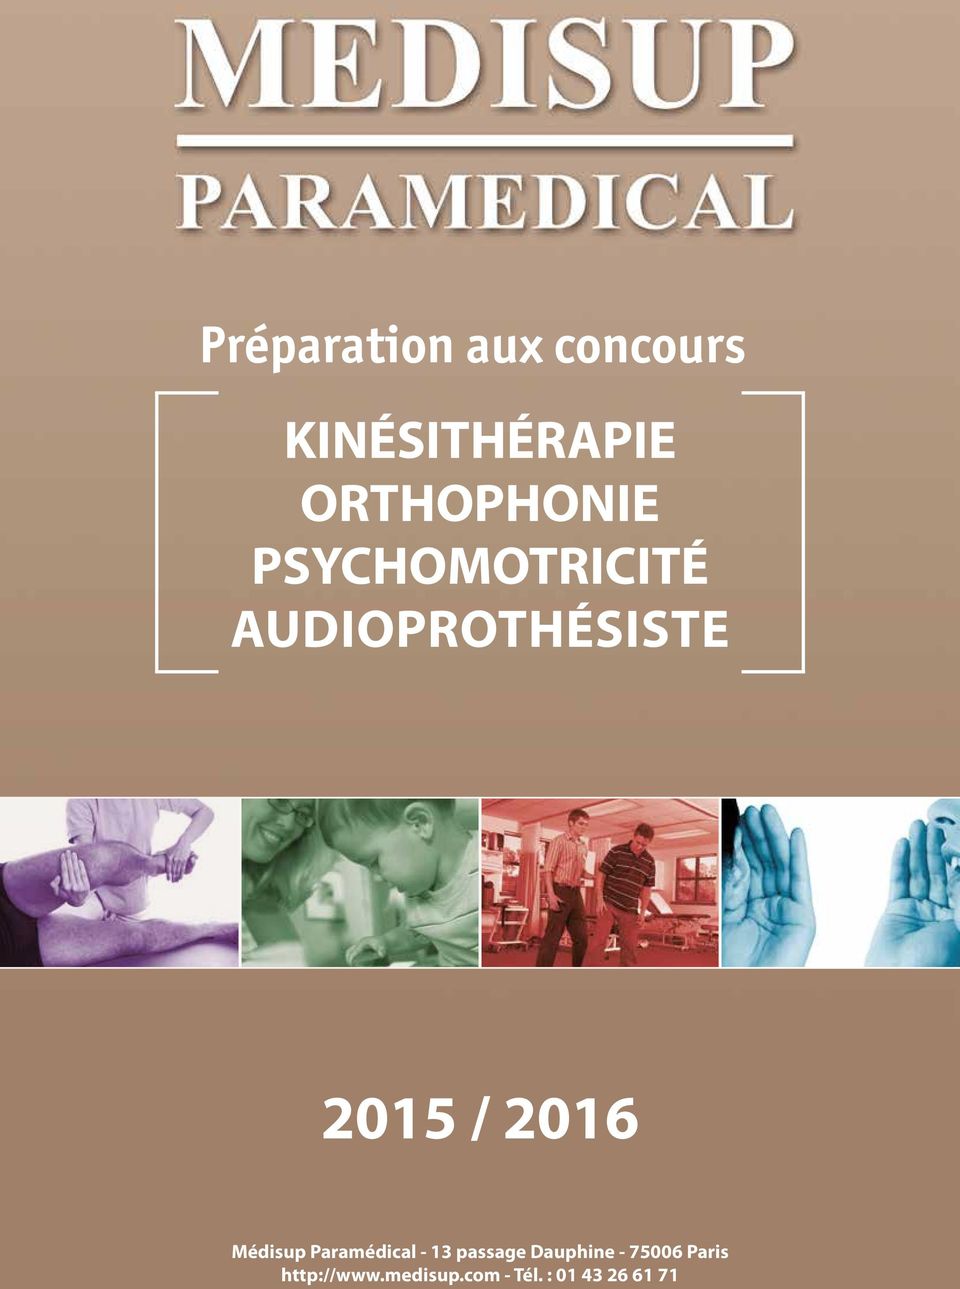 / 2016 Médisup Paramédical - 13 passage Dauphine